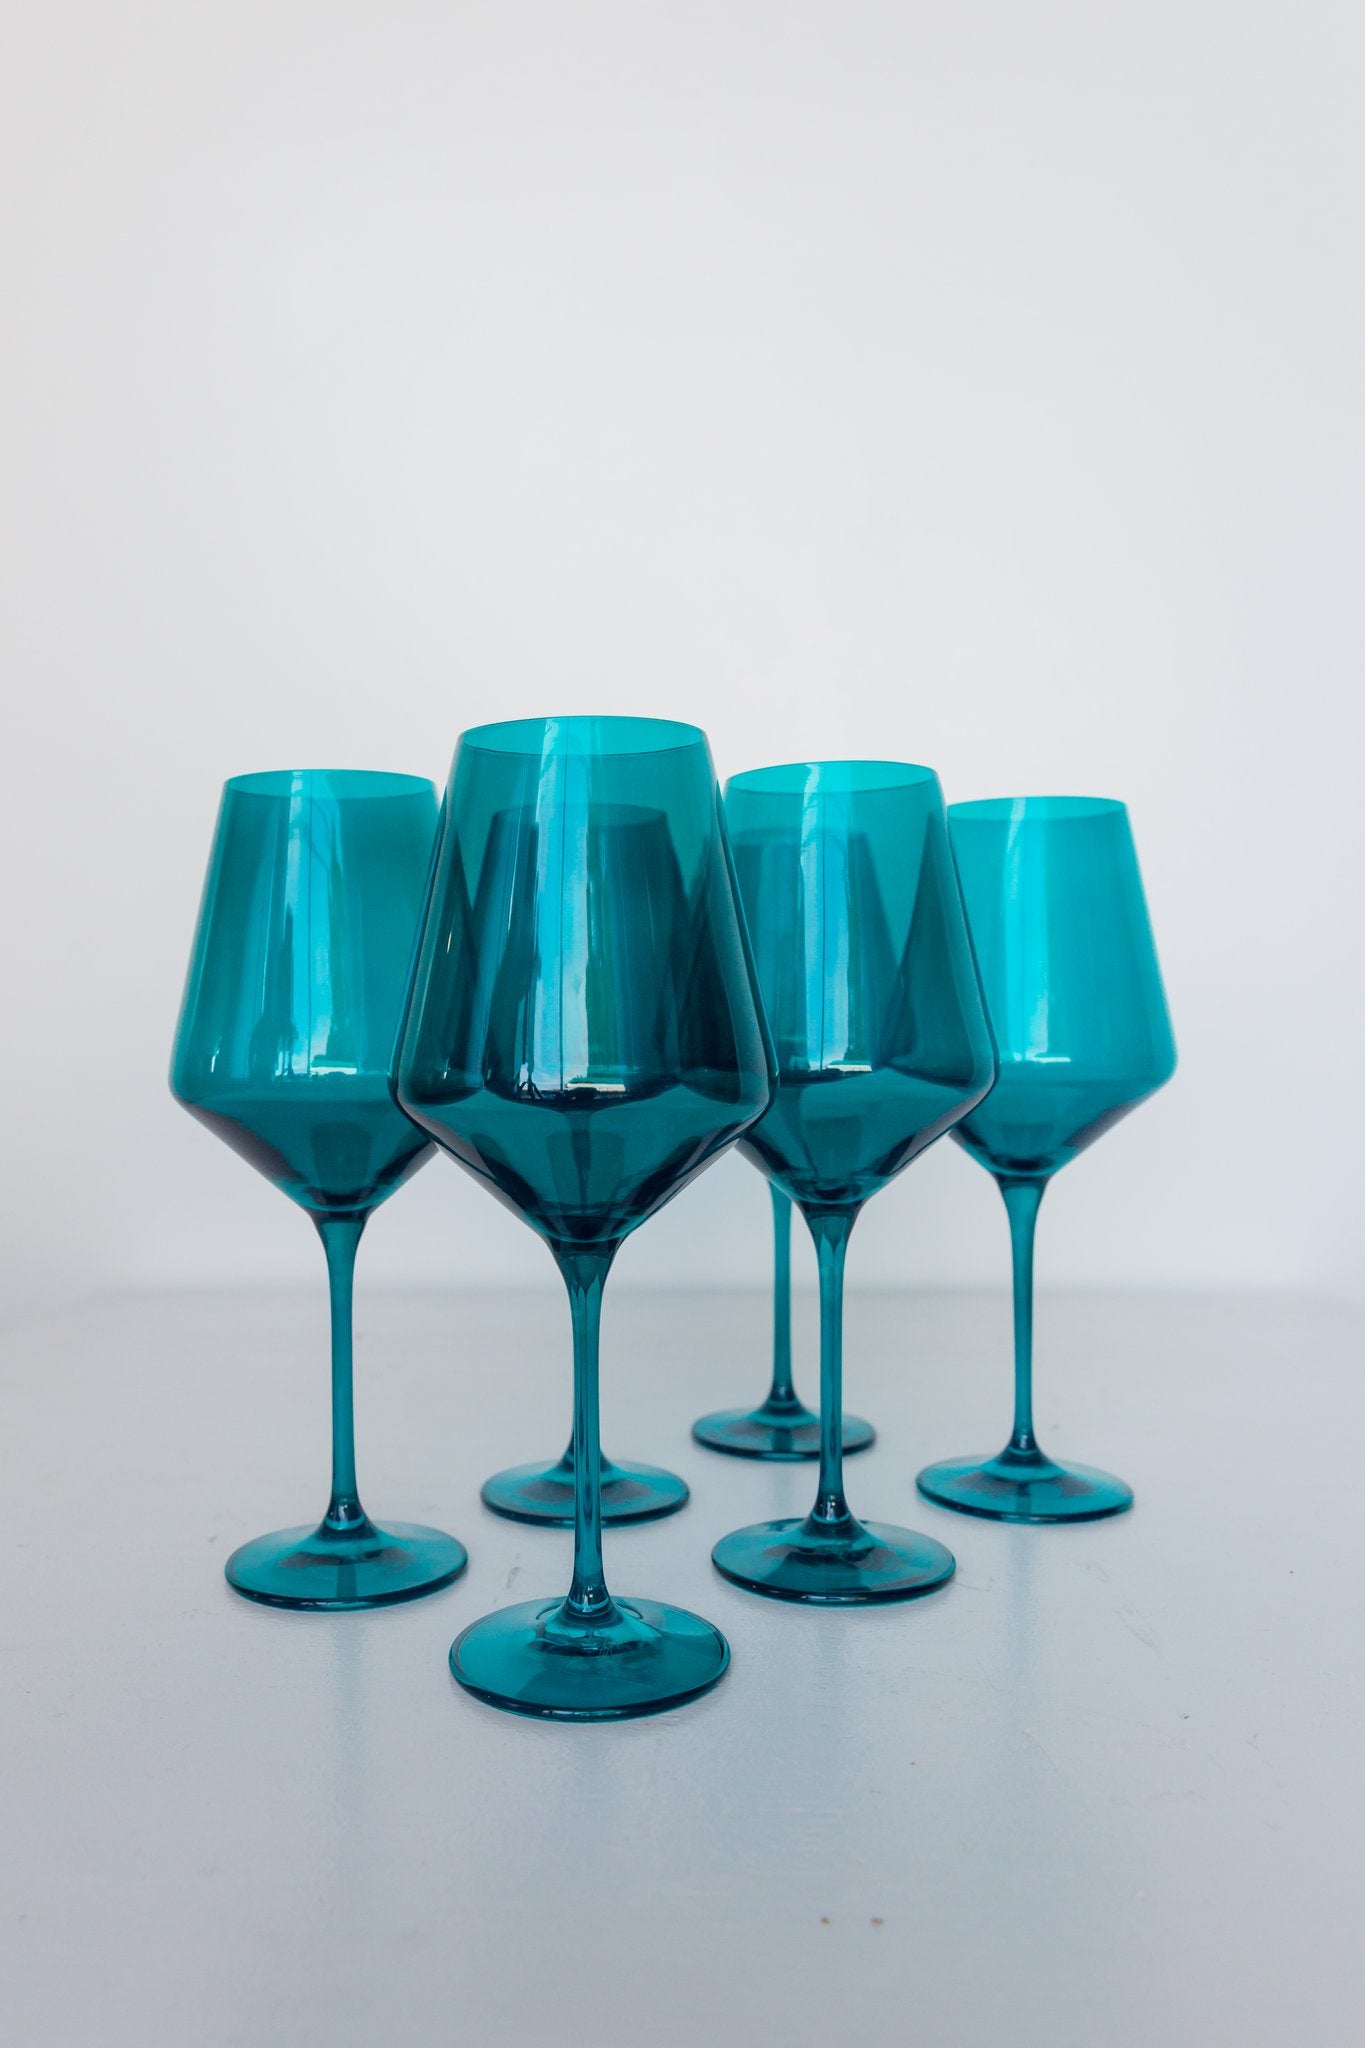 Estelle Colored Glass Stem Wineglasses, Set of 2 - Cobalt Blue